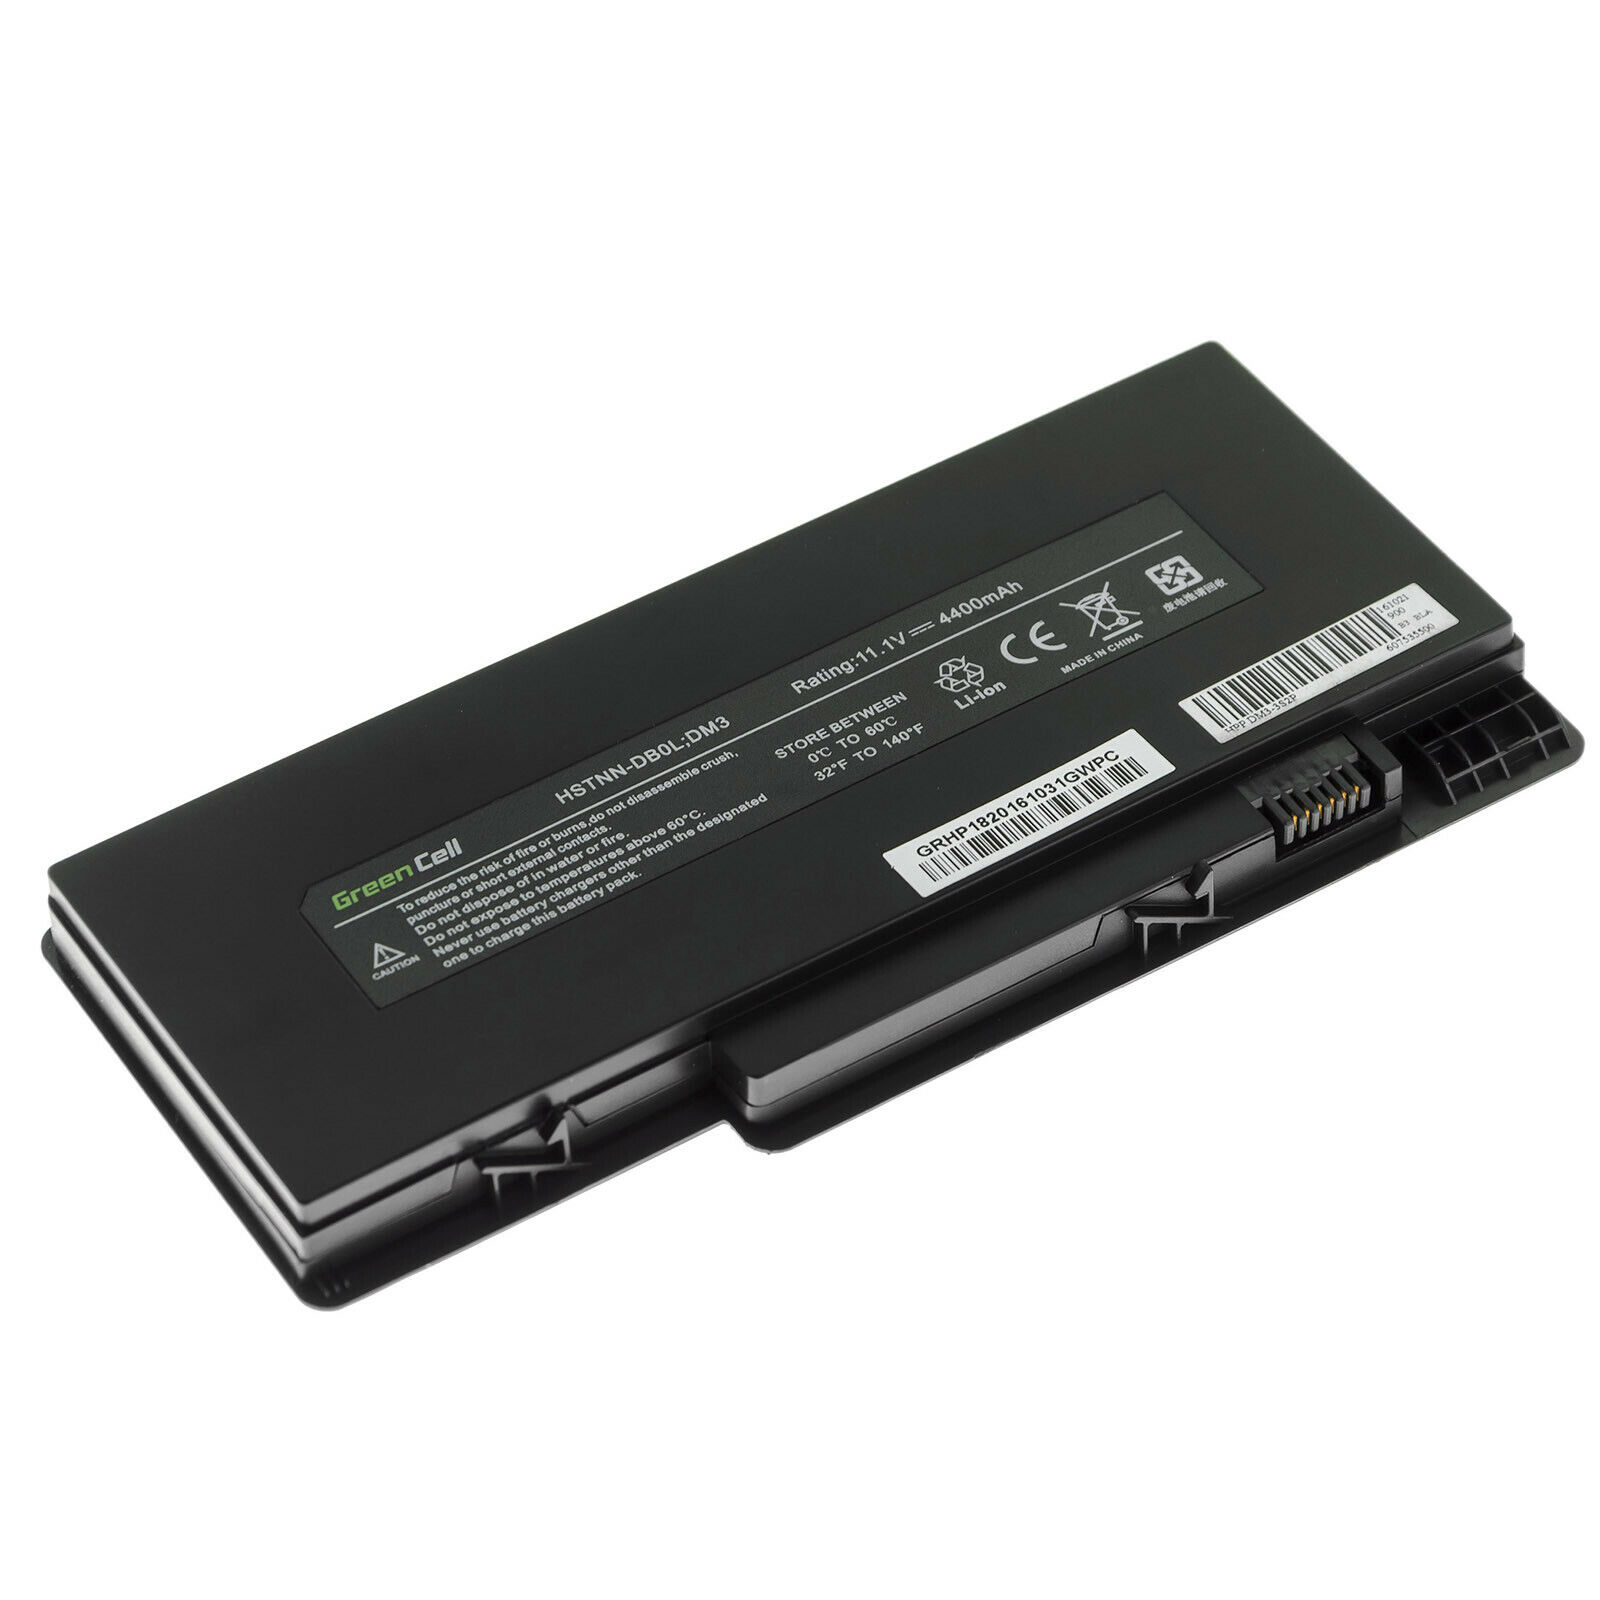 Batería para HP Pavilion dm3 dm3-1040EK dm3-1021TX HSTNN-UB0L HSTNN-OB0L(compatible)